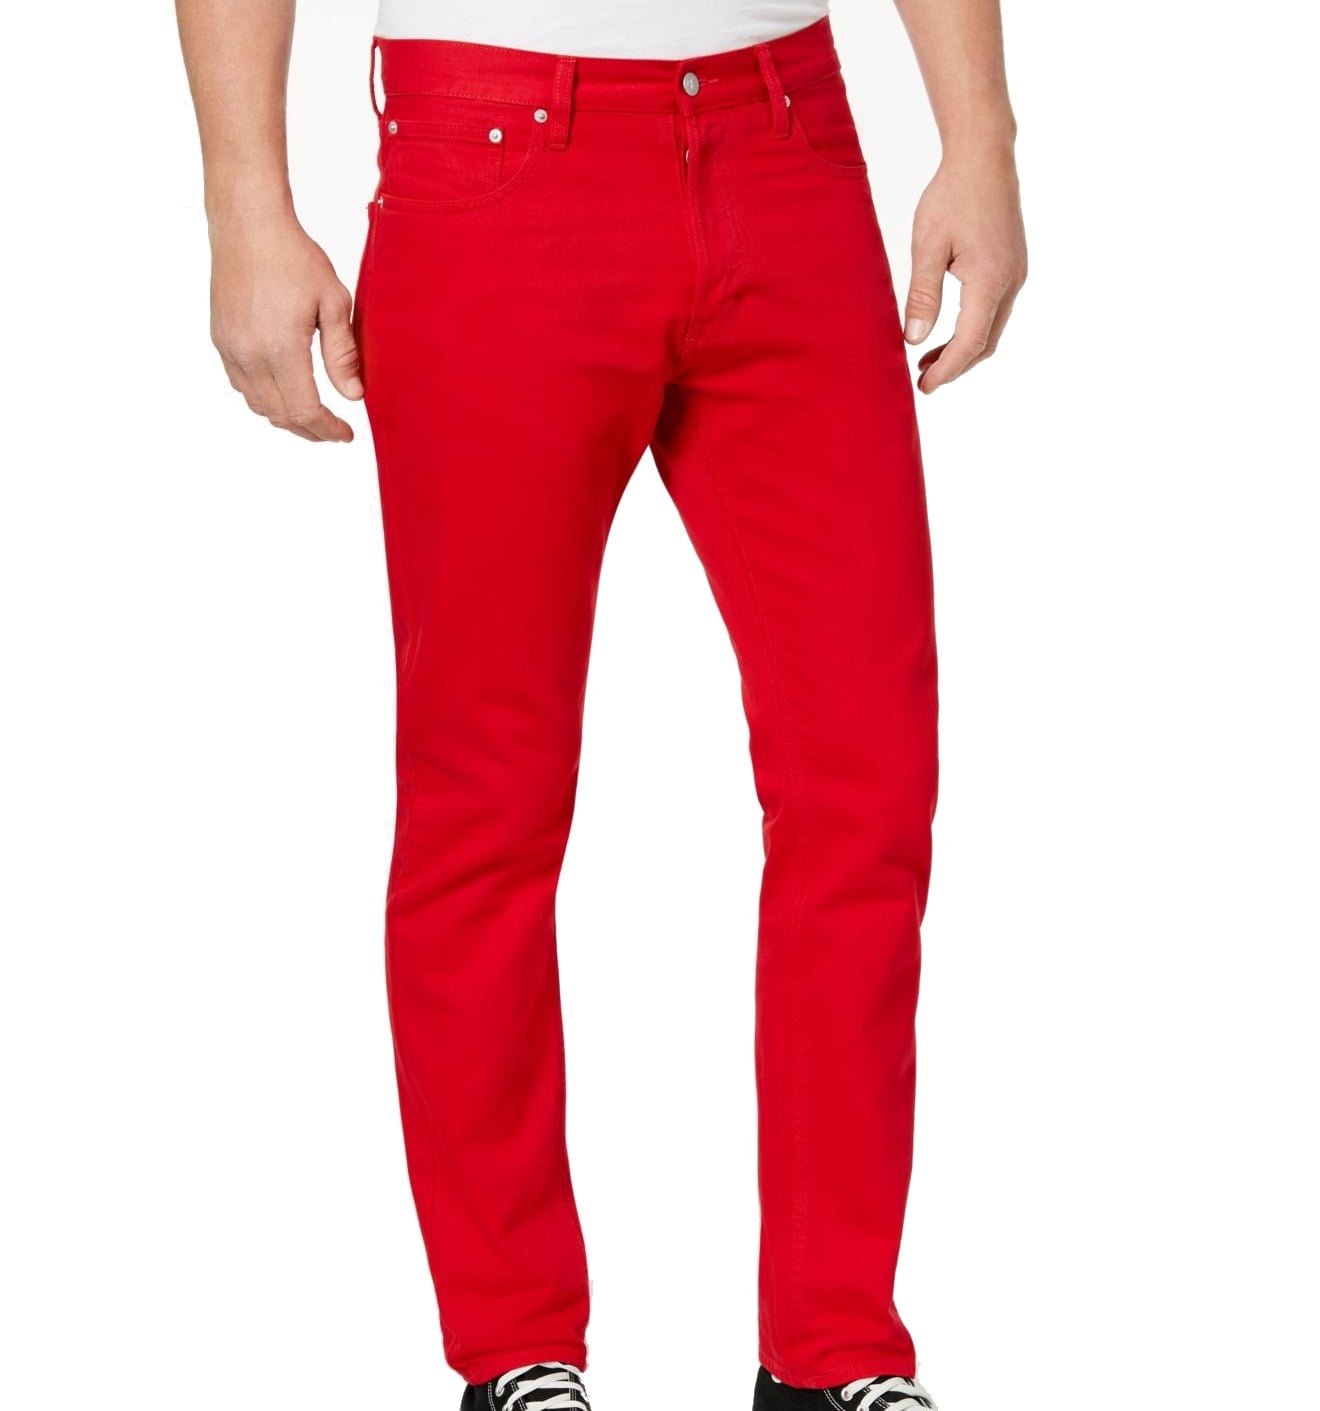 Calvin Klein Mens Iconic Slim Fit Jeans, Red, 30W x 32L - Walmart.com